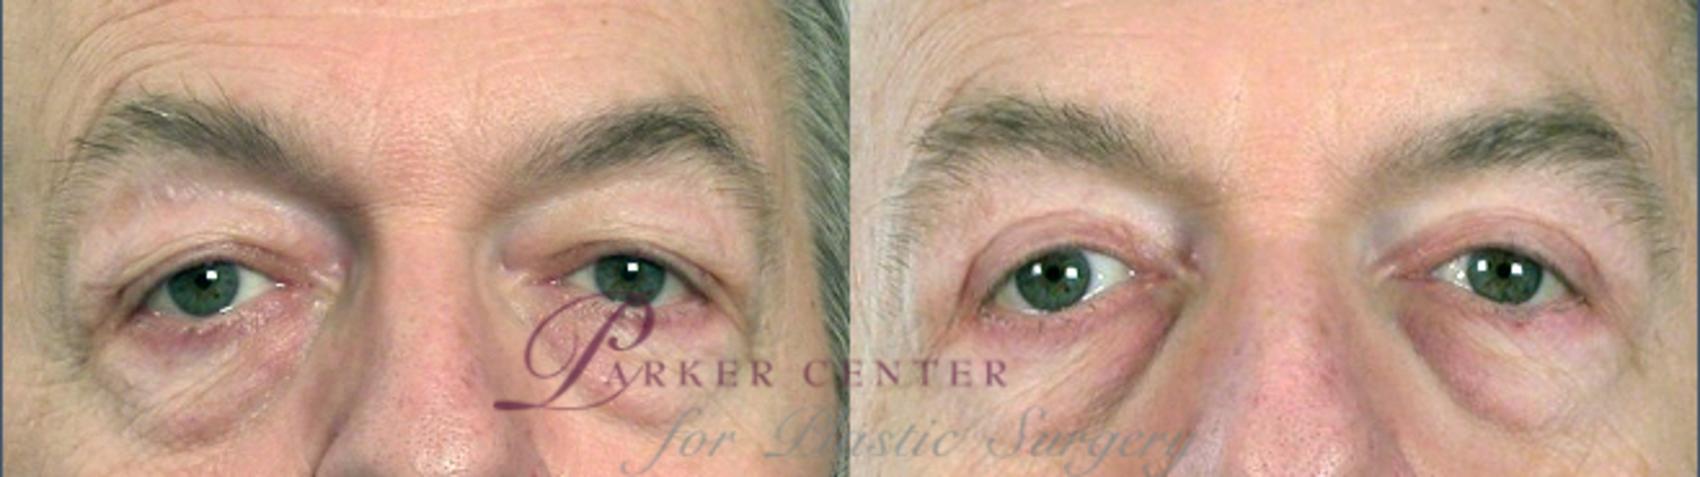 Eyelid Lift Case 49 Before & After View #1 | Paramus, NJ | Parker Center for Plastic Surgery